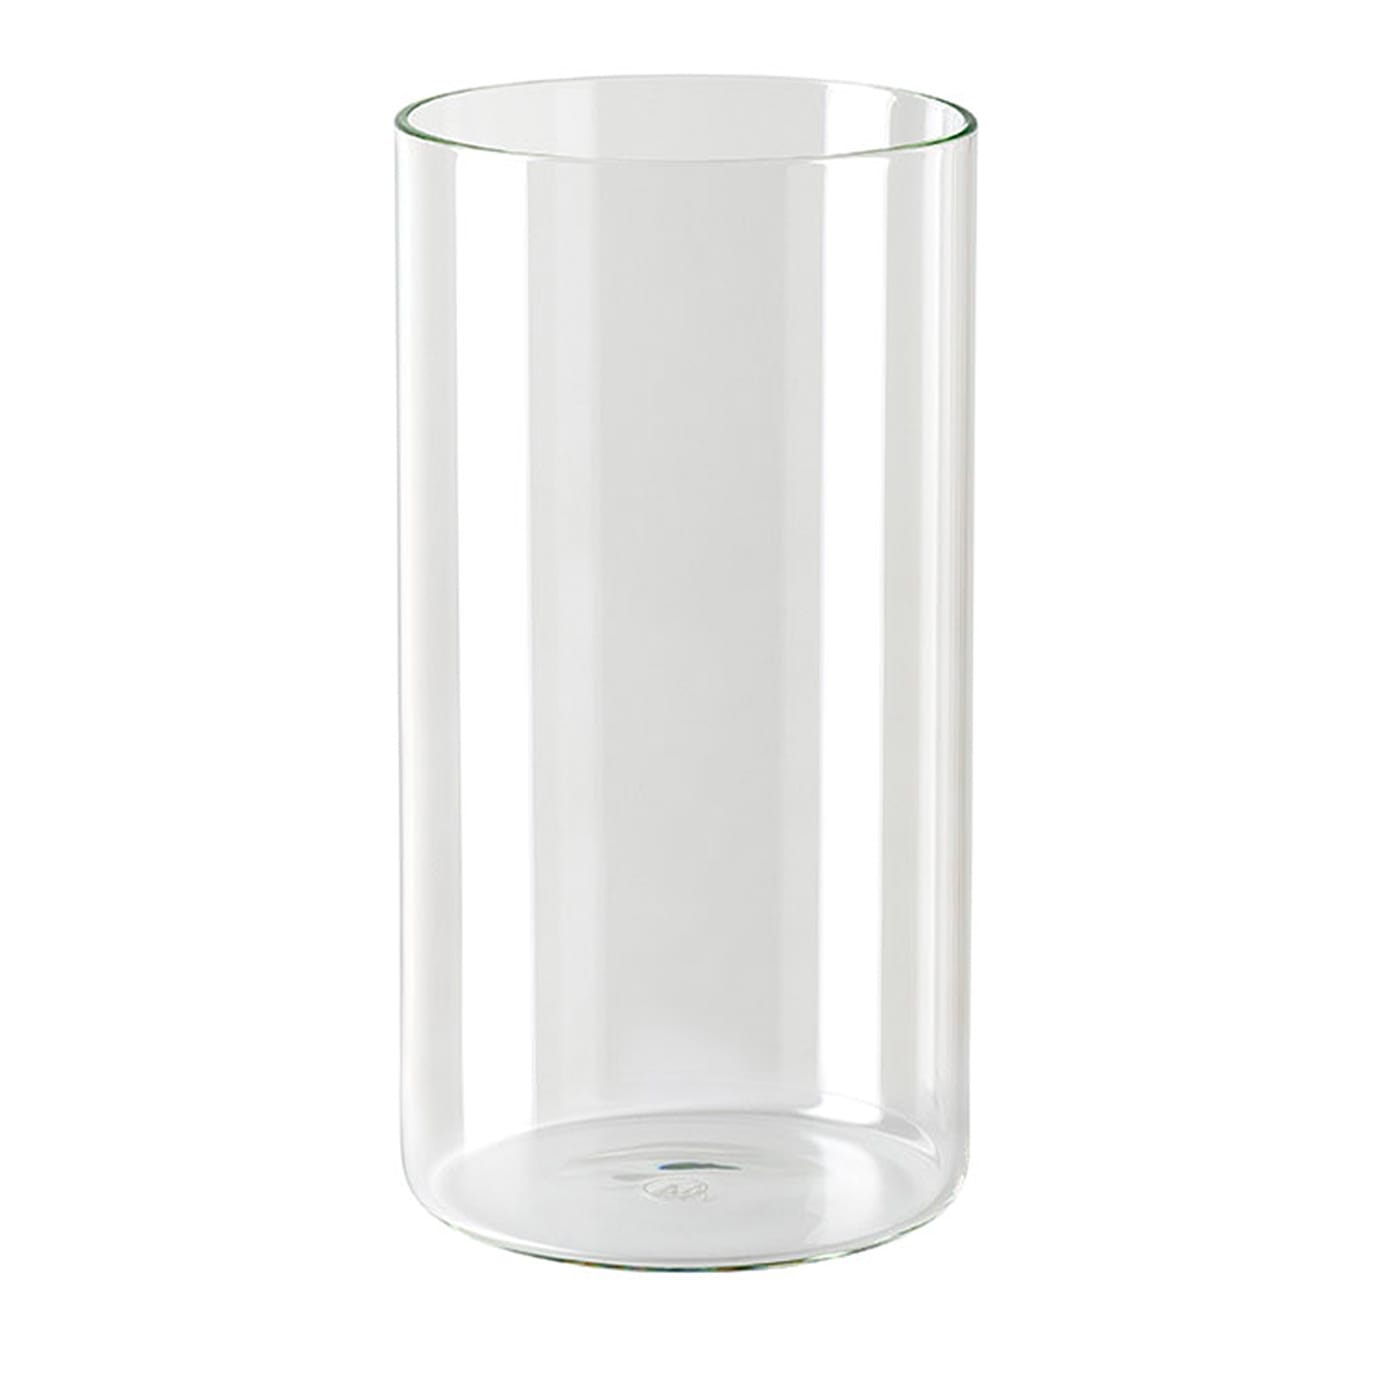 Easy 03 Glass Vase - Slow Design 44